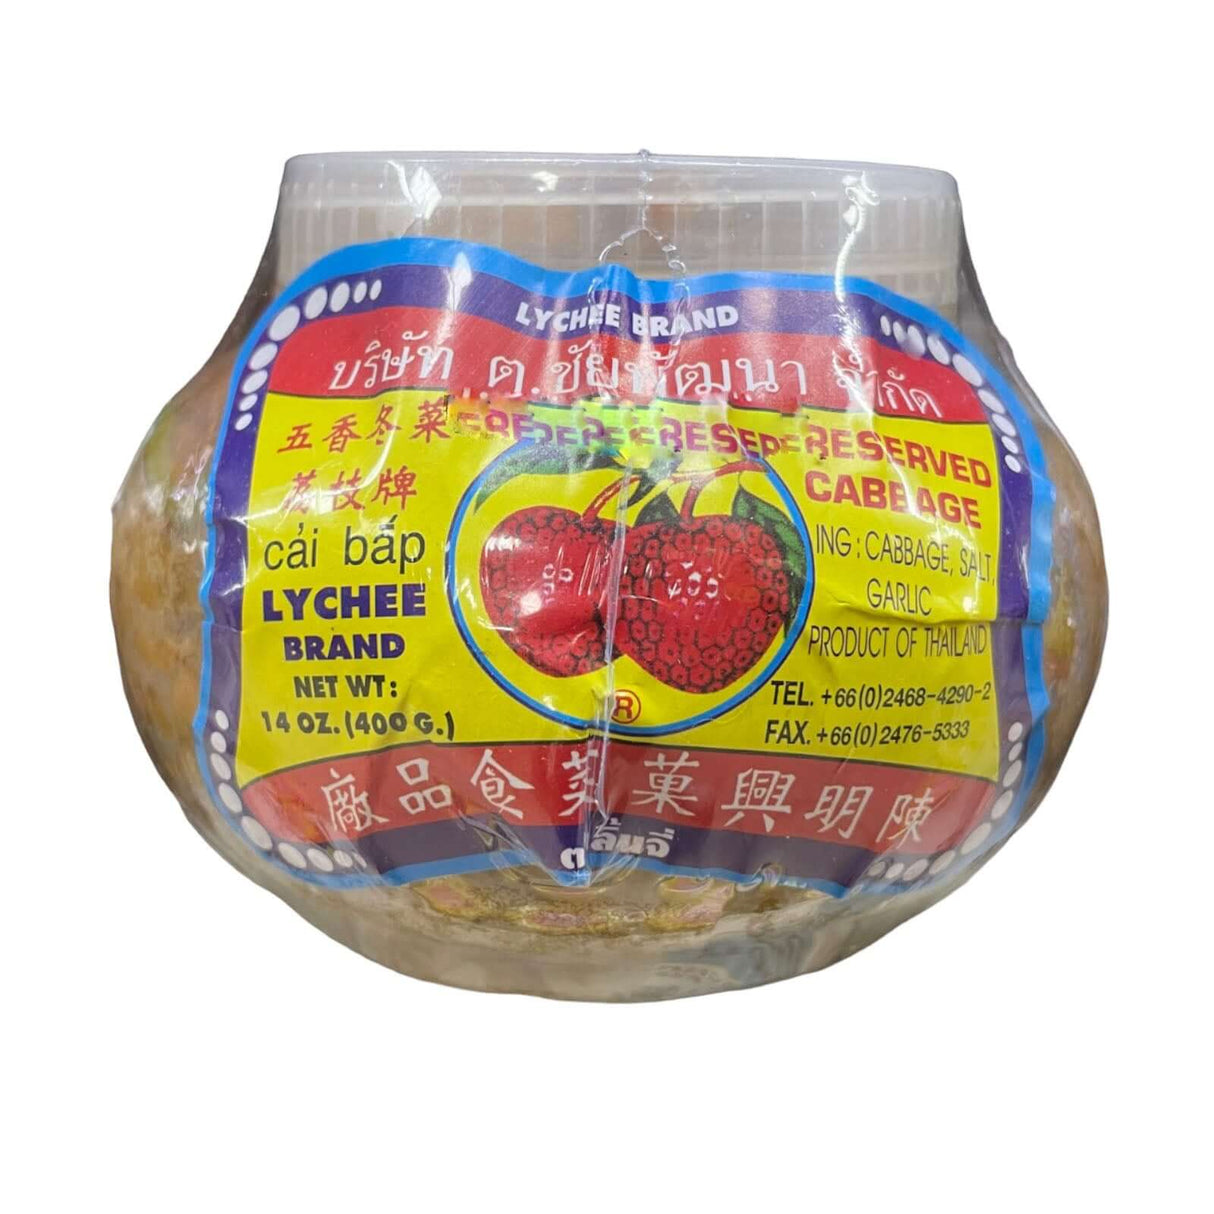 Lychee Brand Preserved Cabbage